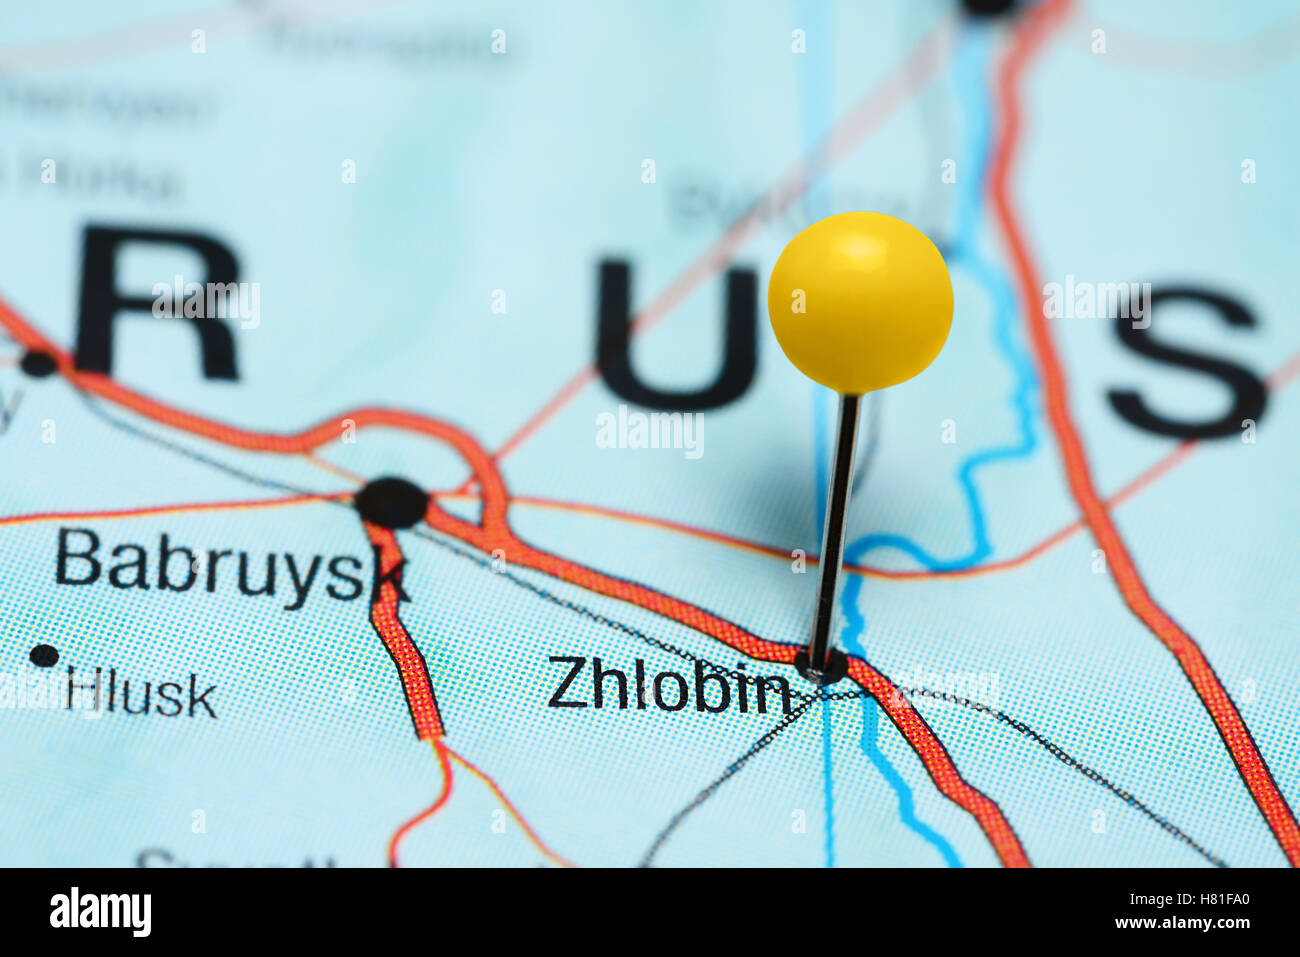 Zhlobin pinned on a map of Belarus Stock Photo